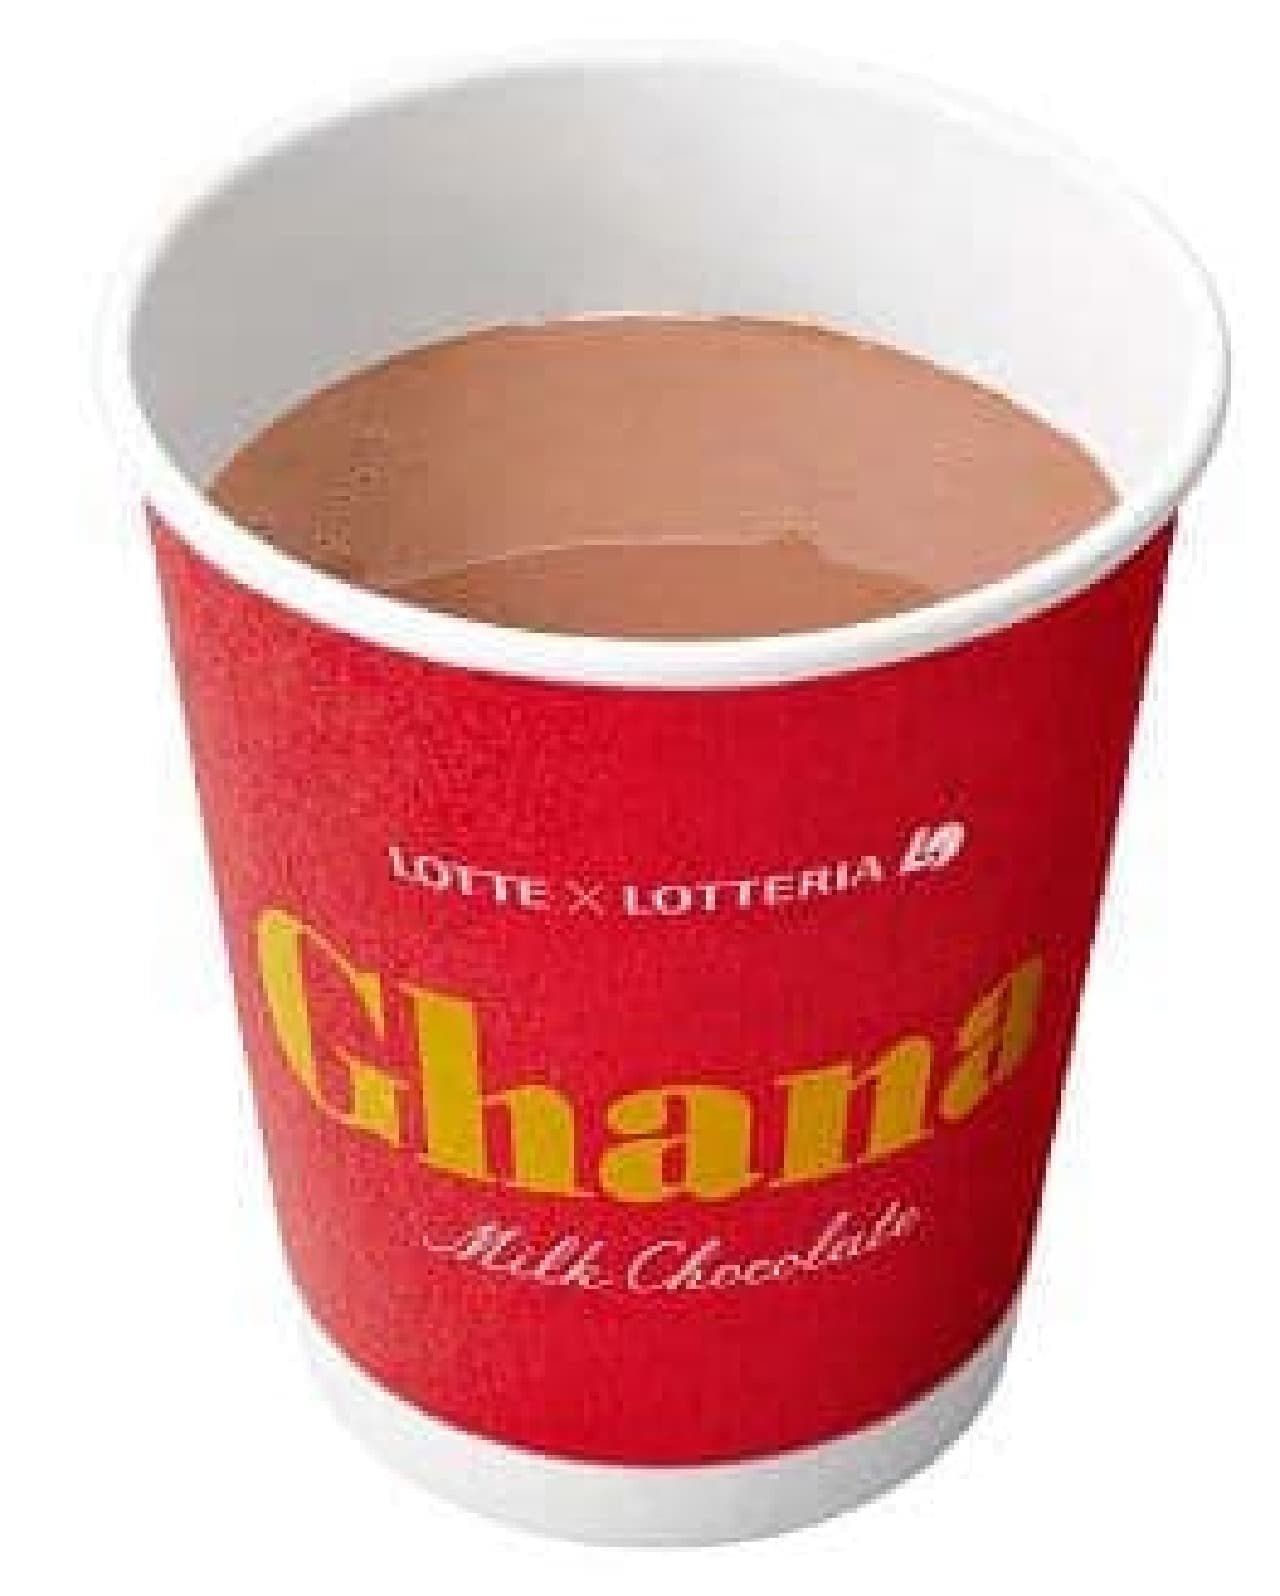 Lotteria Ghana Cafe "Hot Ghana Milk Chocolate Latte"